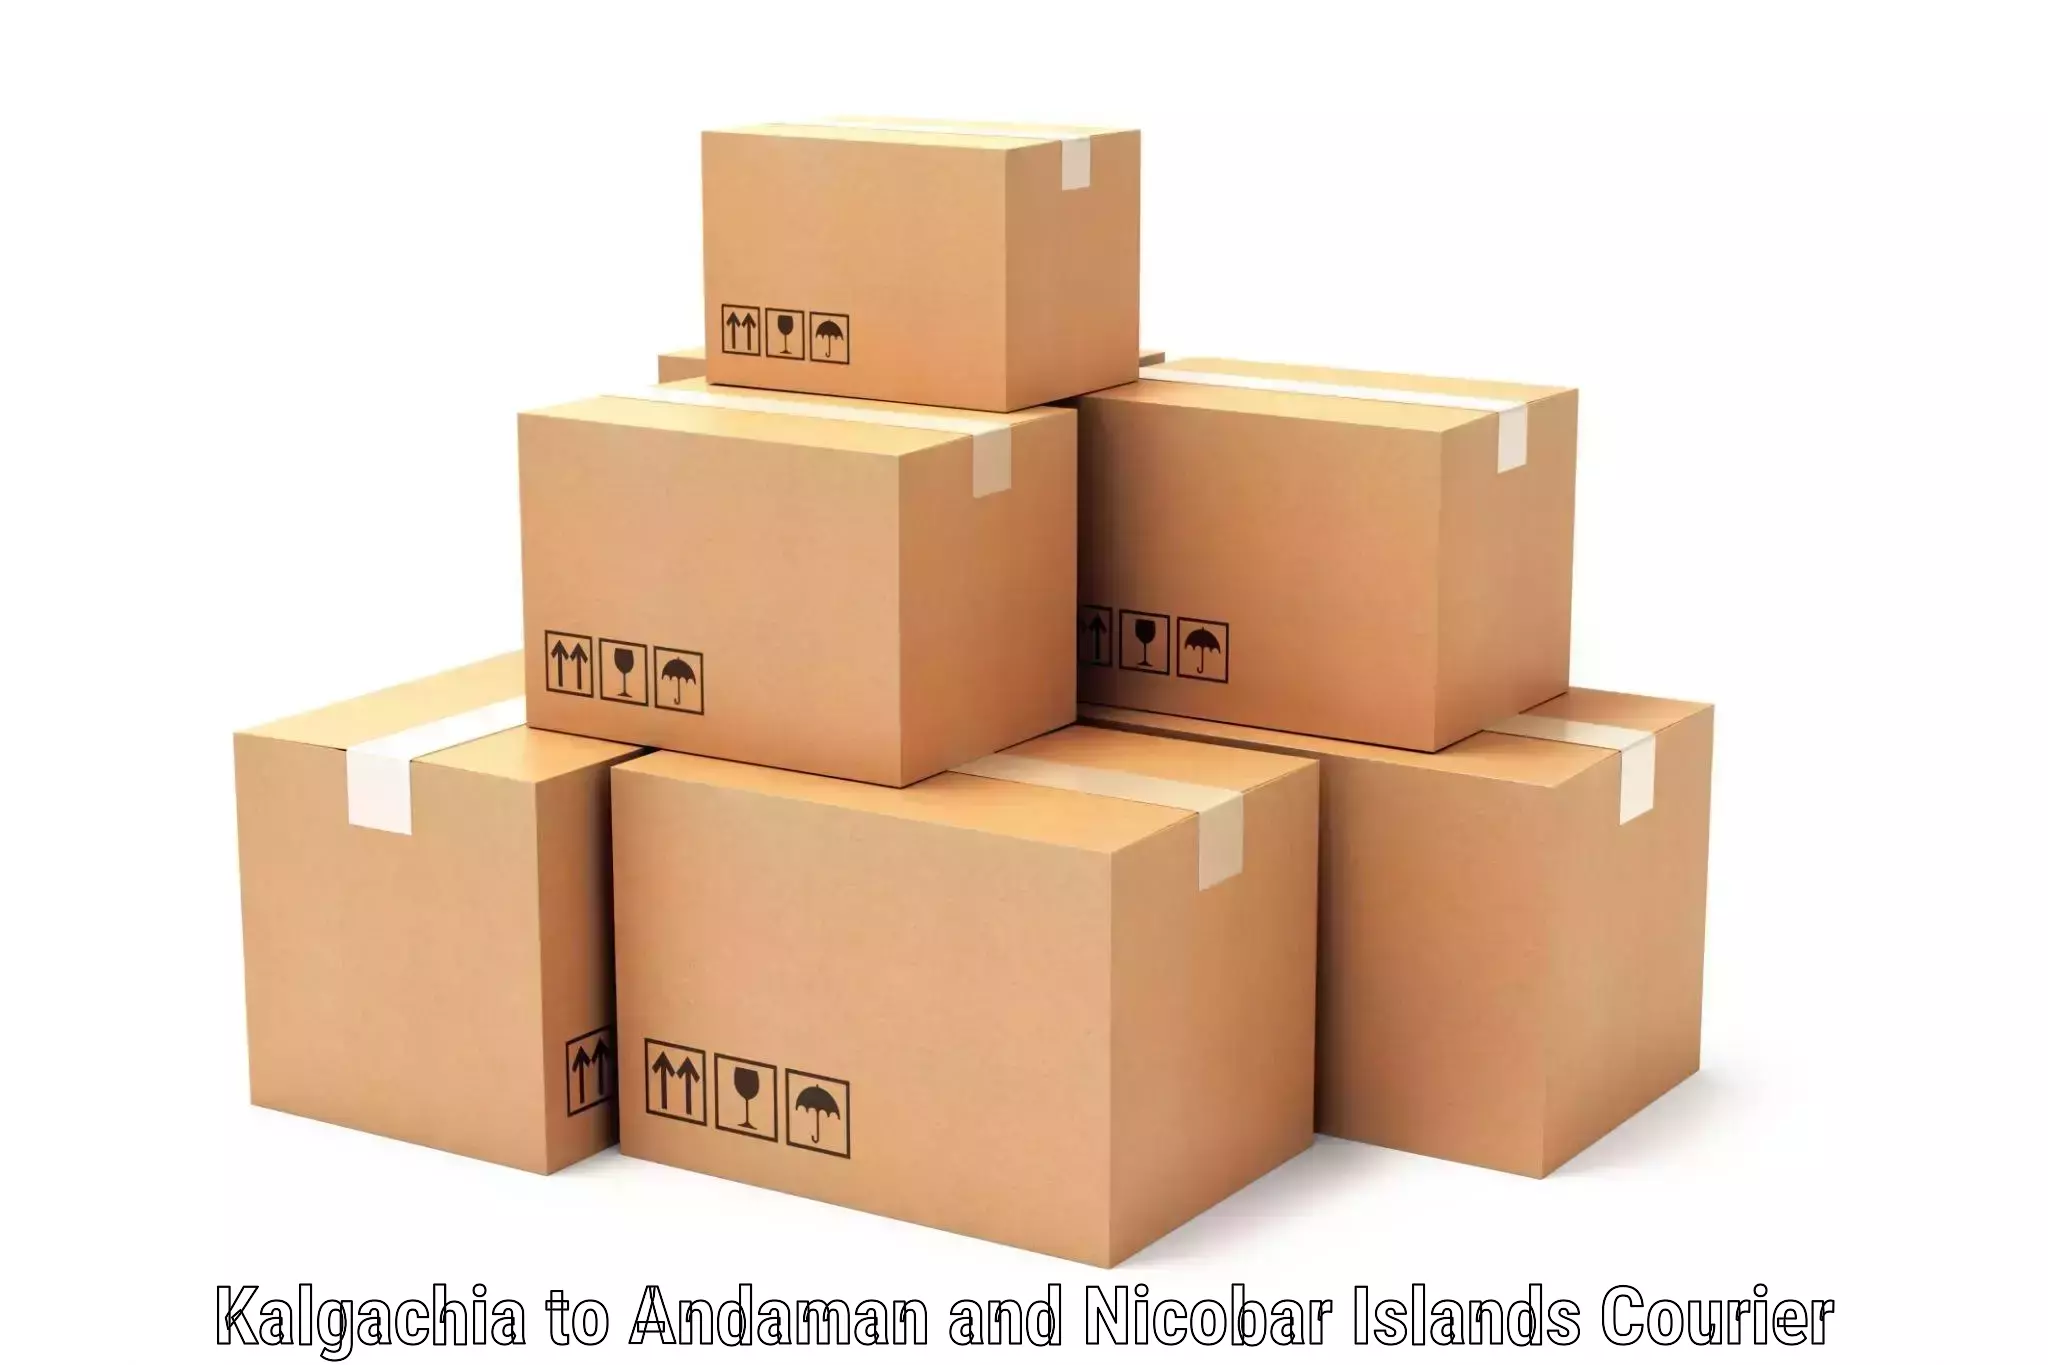 Wholesale parcel delivery in Kalgachia to Port Blair